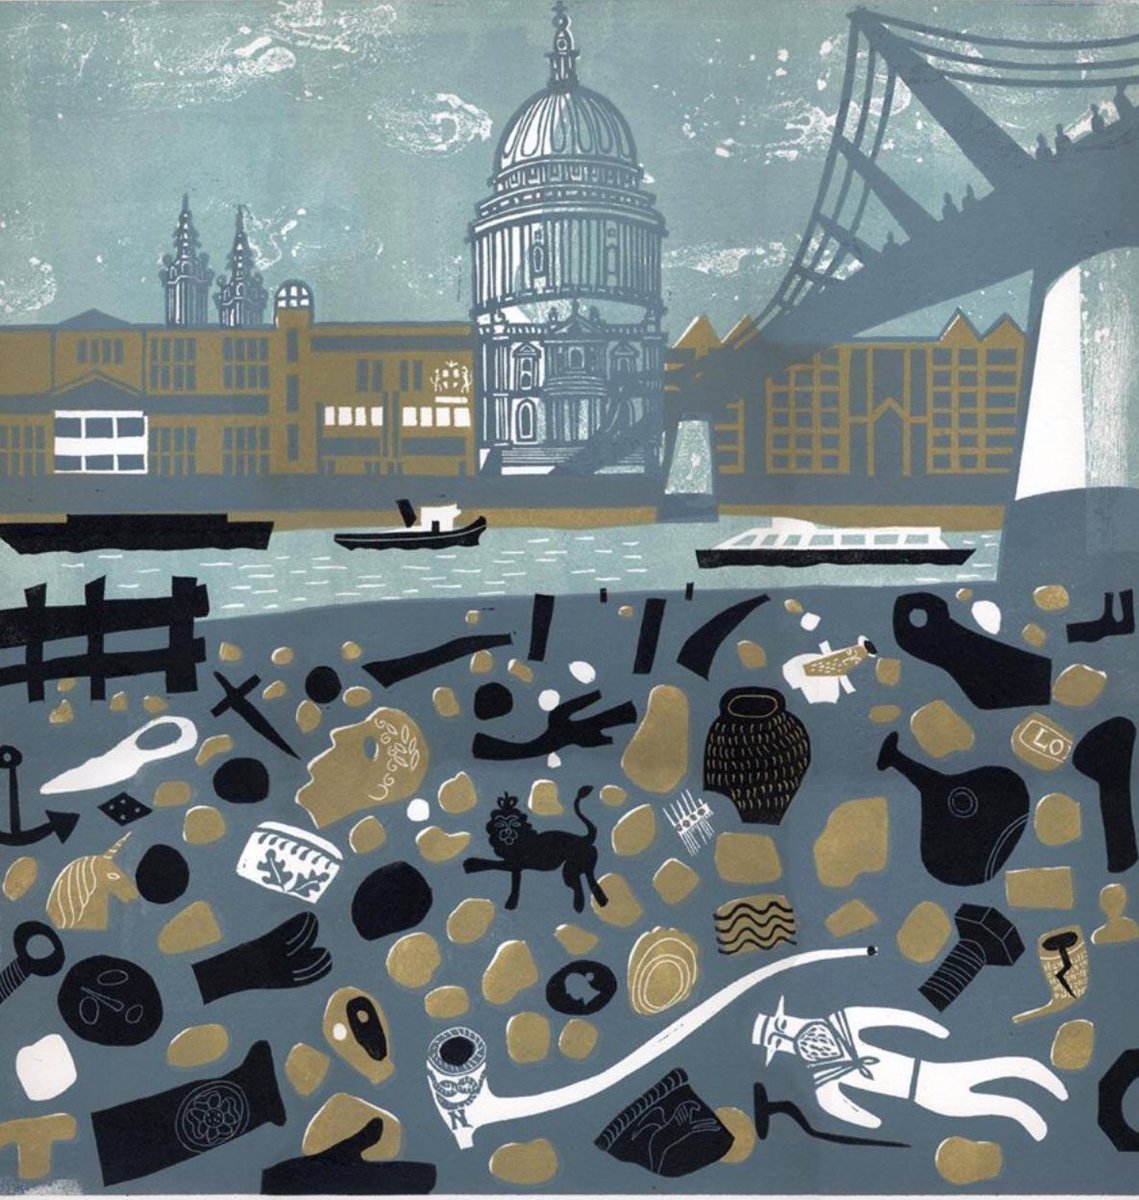 Fab #illustration view of St. Paul’s by the Thames foreshore by Melvyn Evans #mudlark #mudlarking #thames #southbank #milleniumbridge